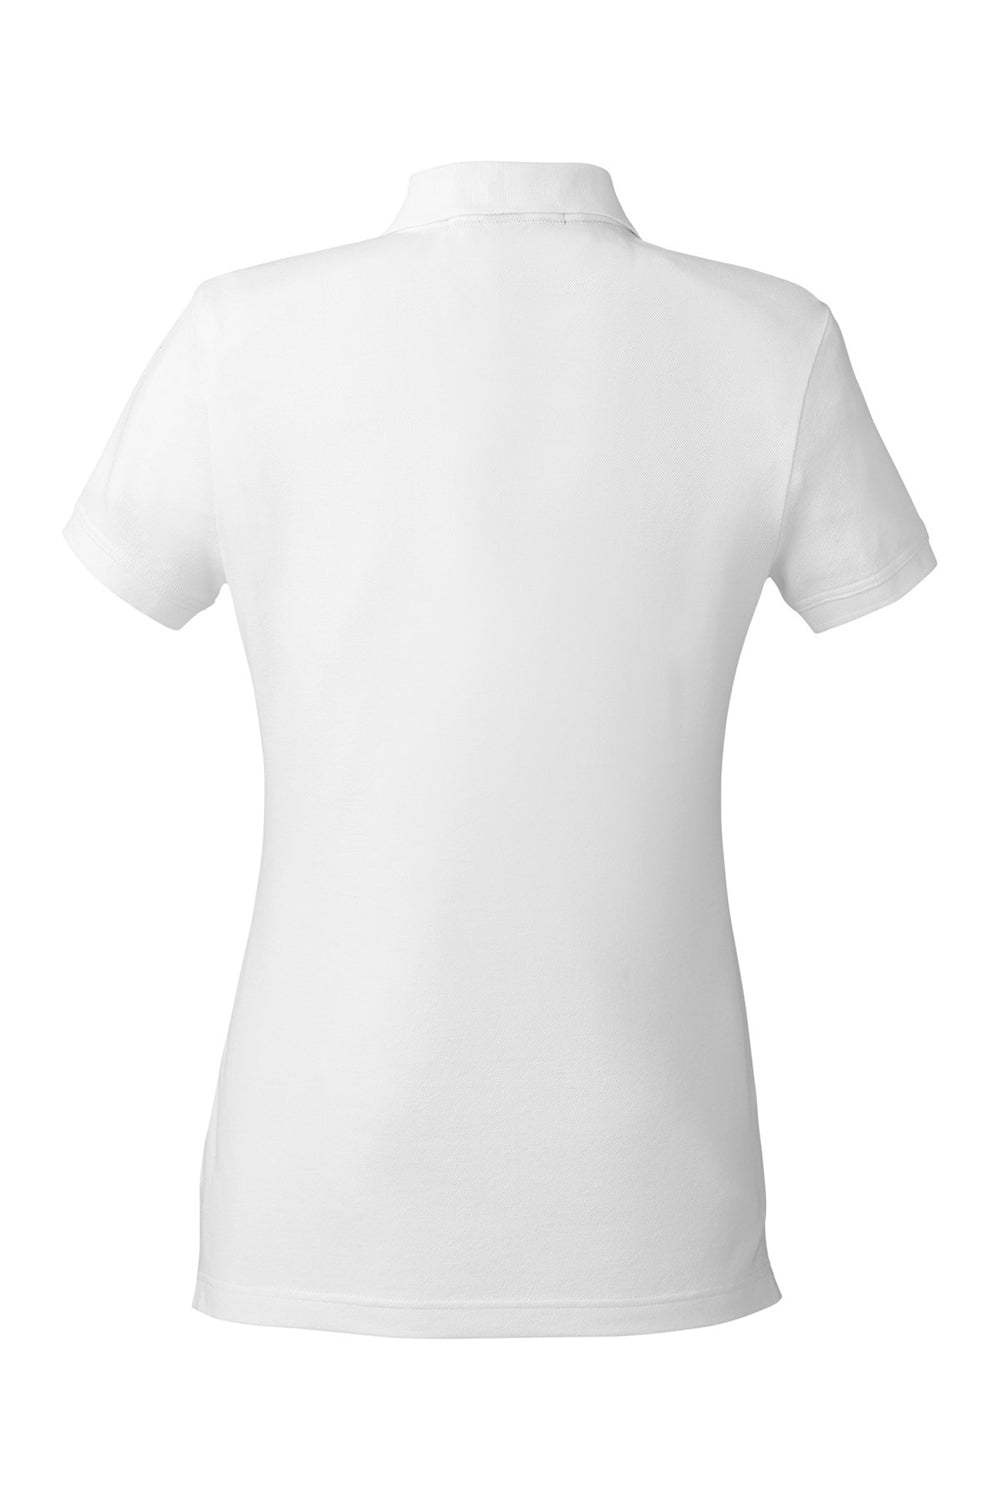 Devon & Jones DG100W Womens New Classics Performance Moisture Wicking Short Sleeve Polo Shirt White Flat Back